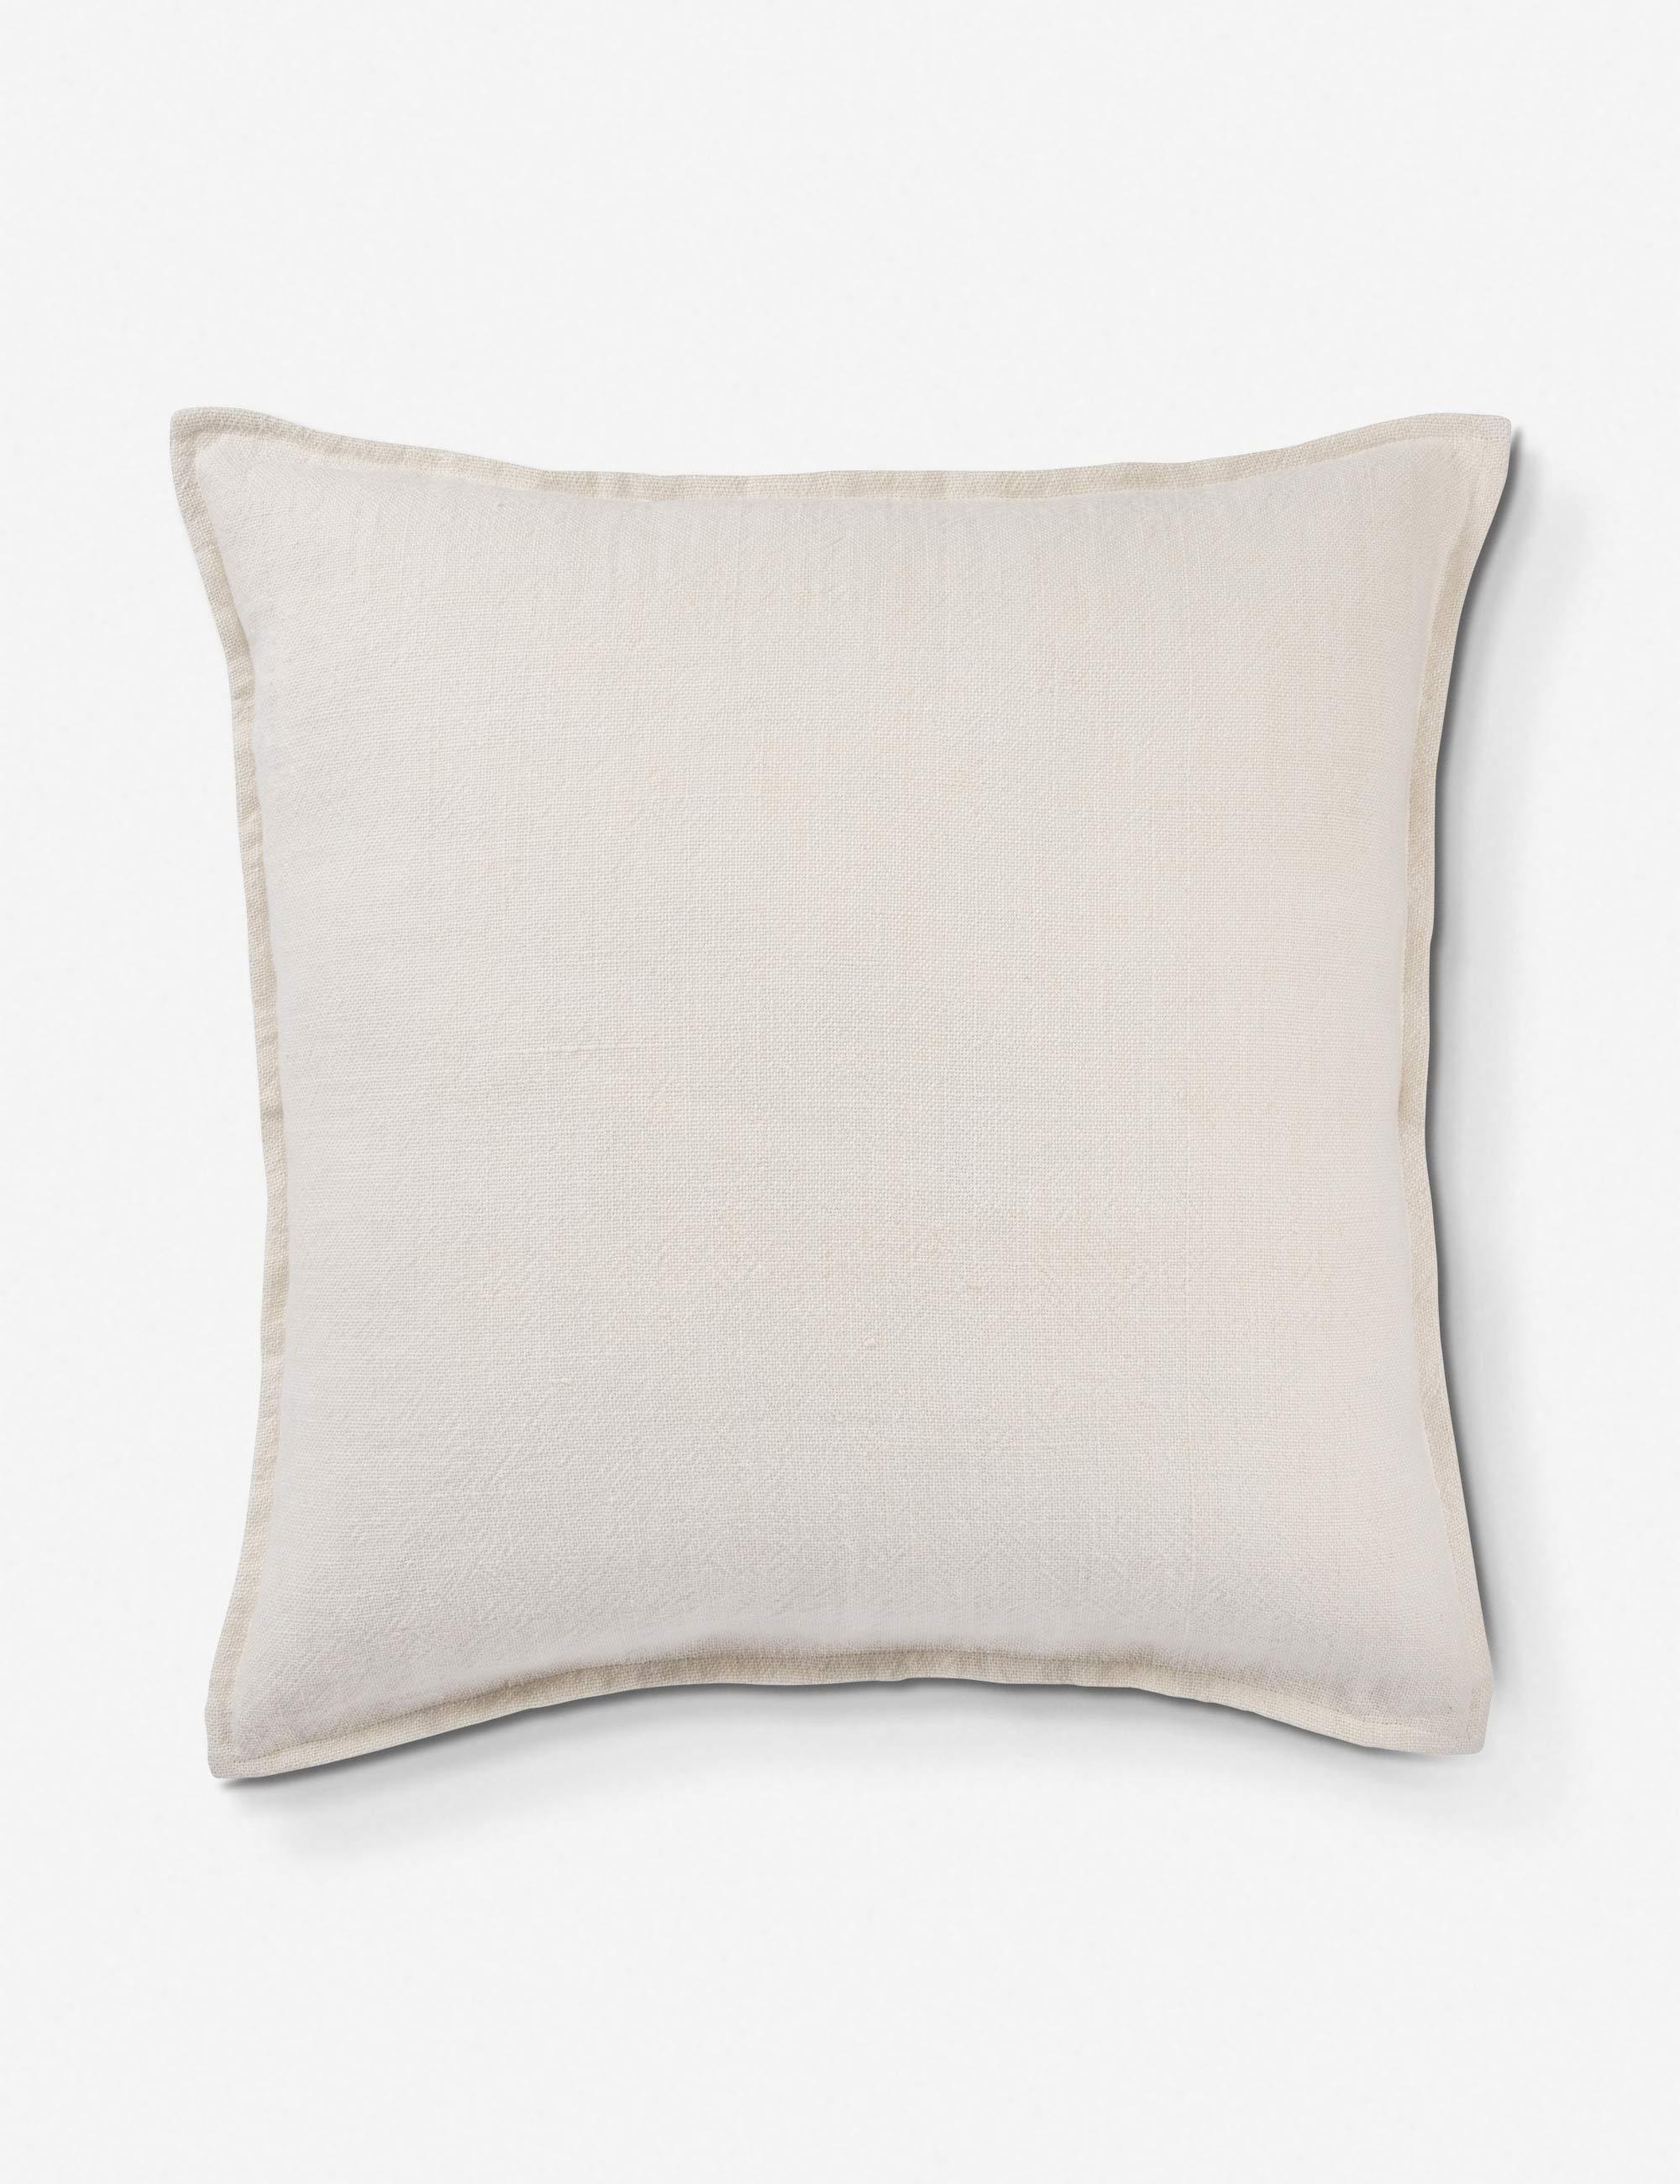 Emalita Coastal Elegance White Linen 22" Square Embroidered Pillow